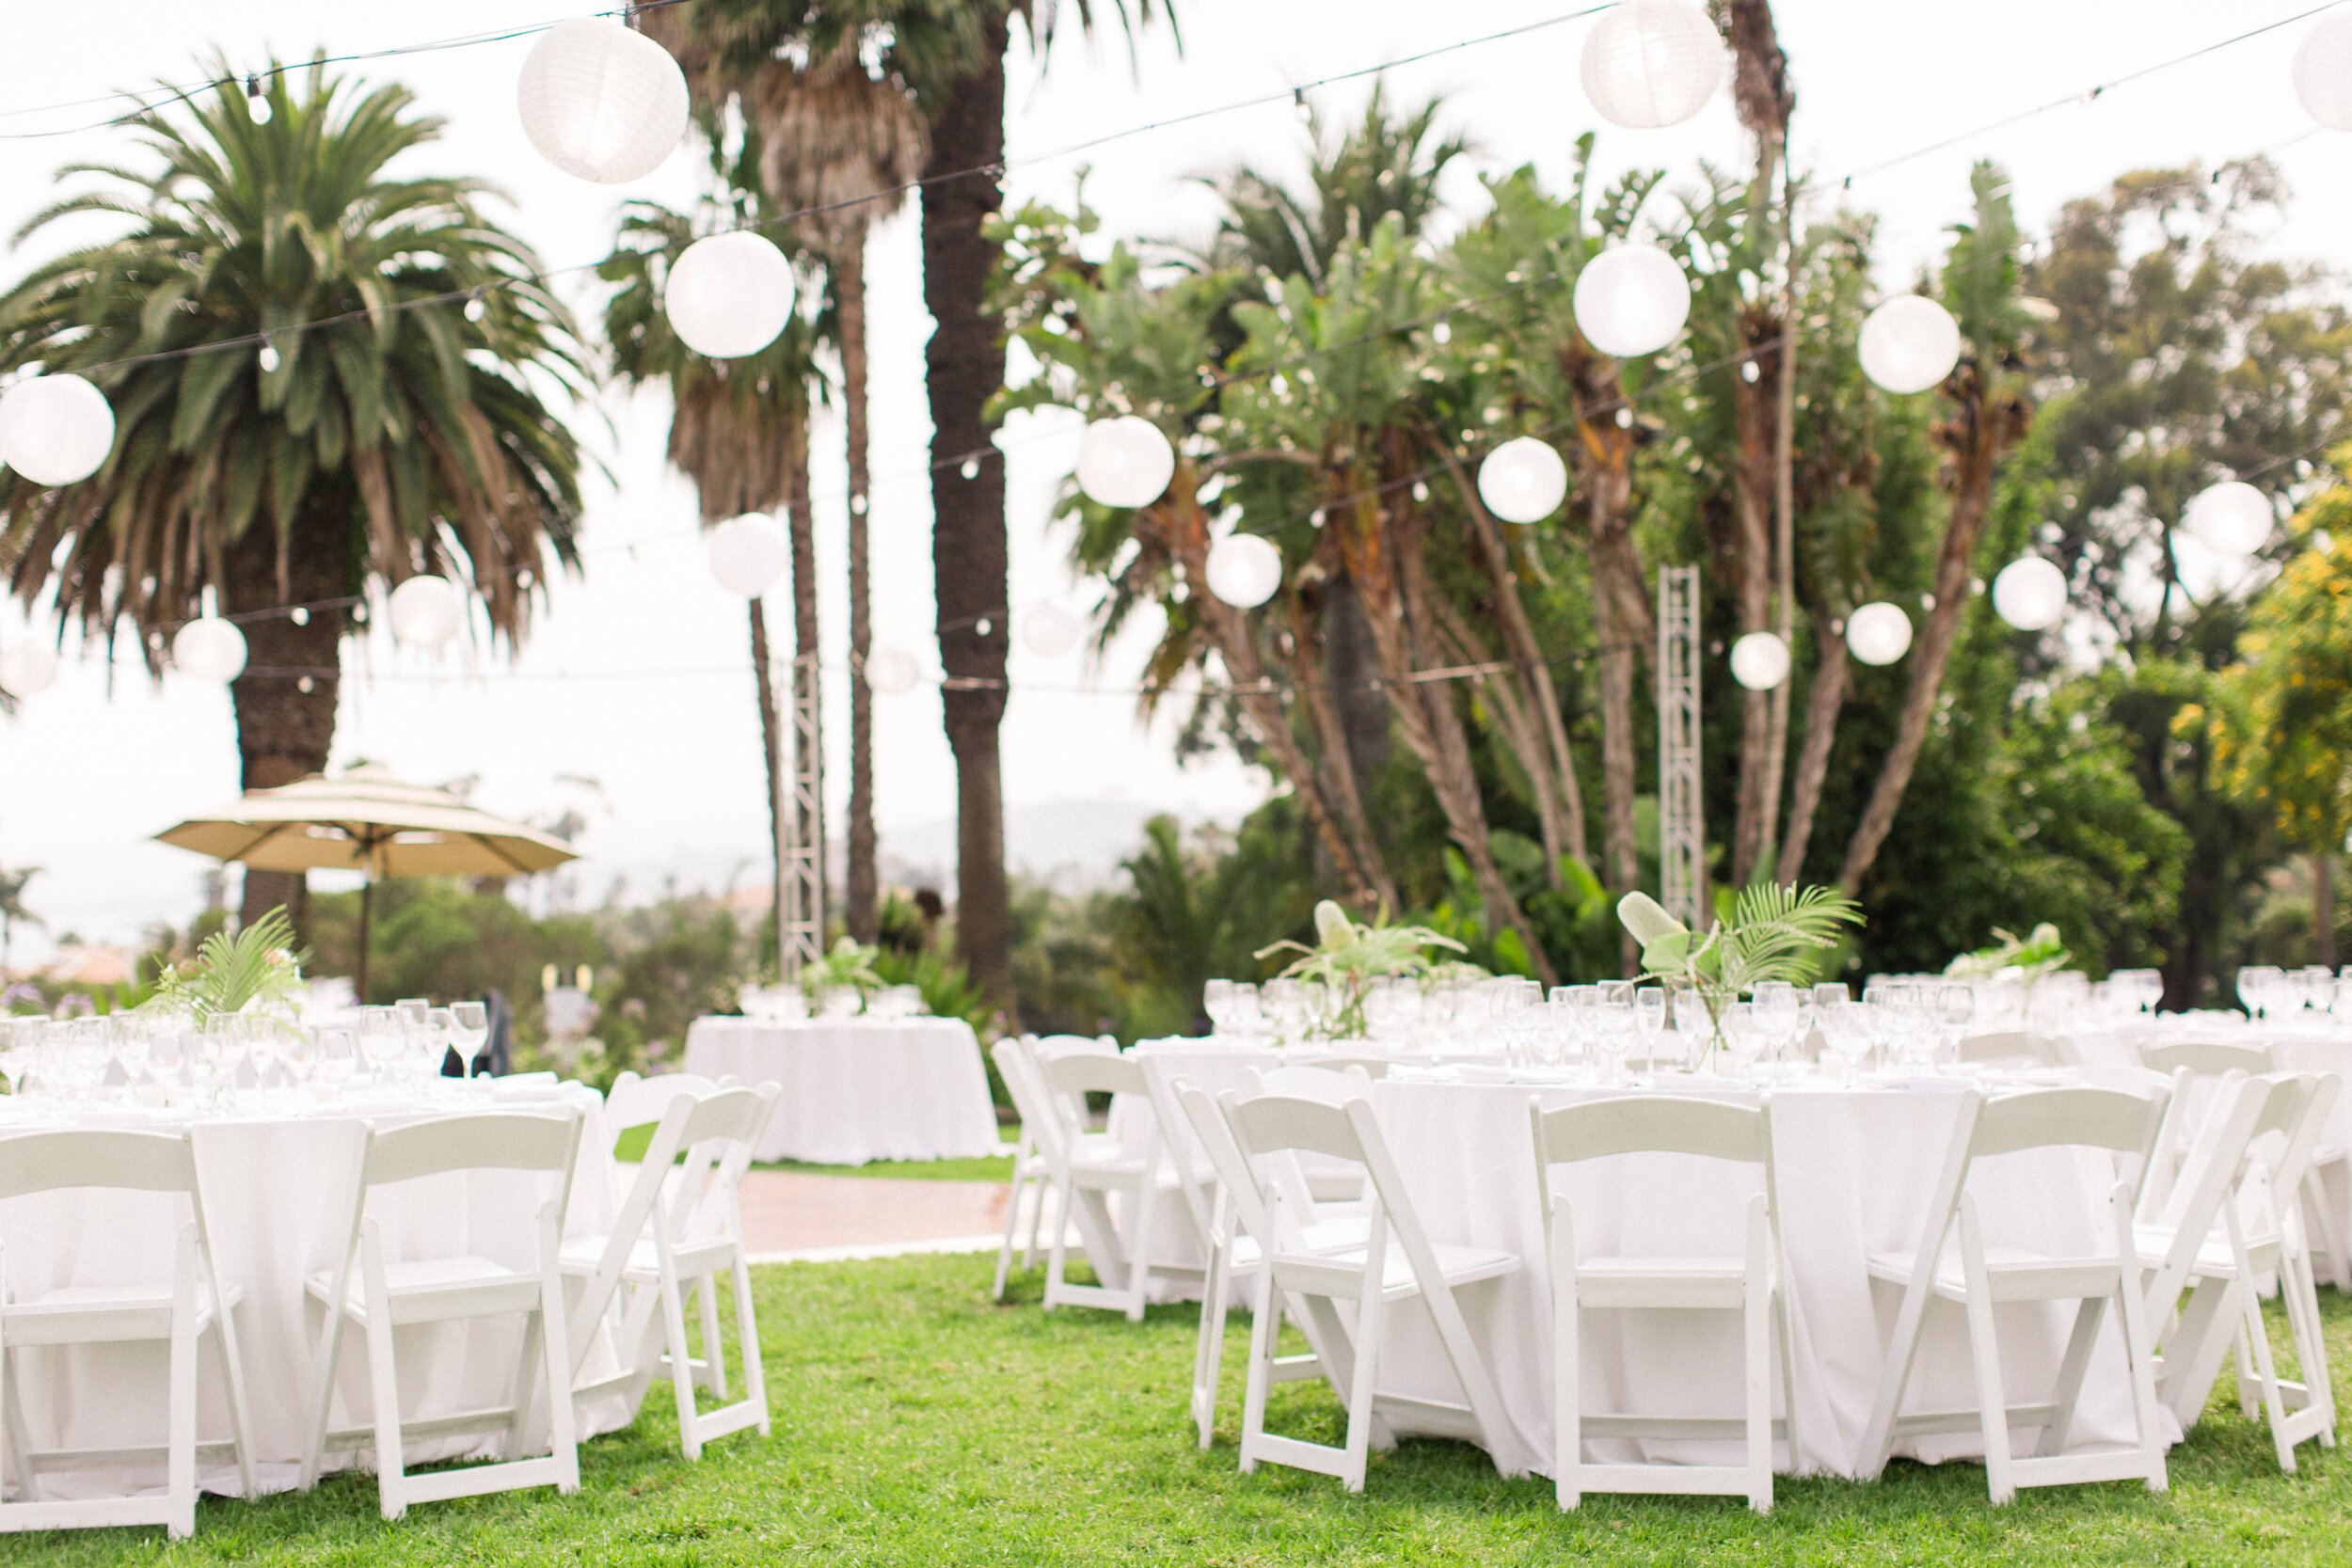 www.santabarbarawedding.com | The Vondys | Santa Barbara Zoo | Olivetta Flowers | Rincon Catering | Reception Tables and String Lights